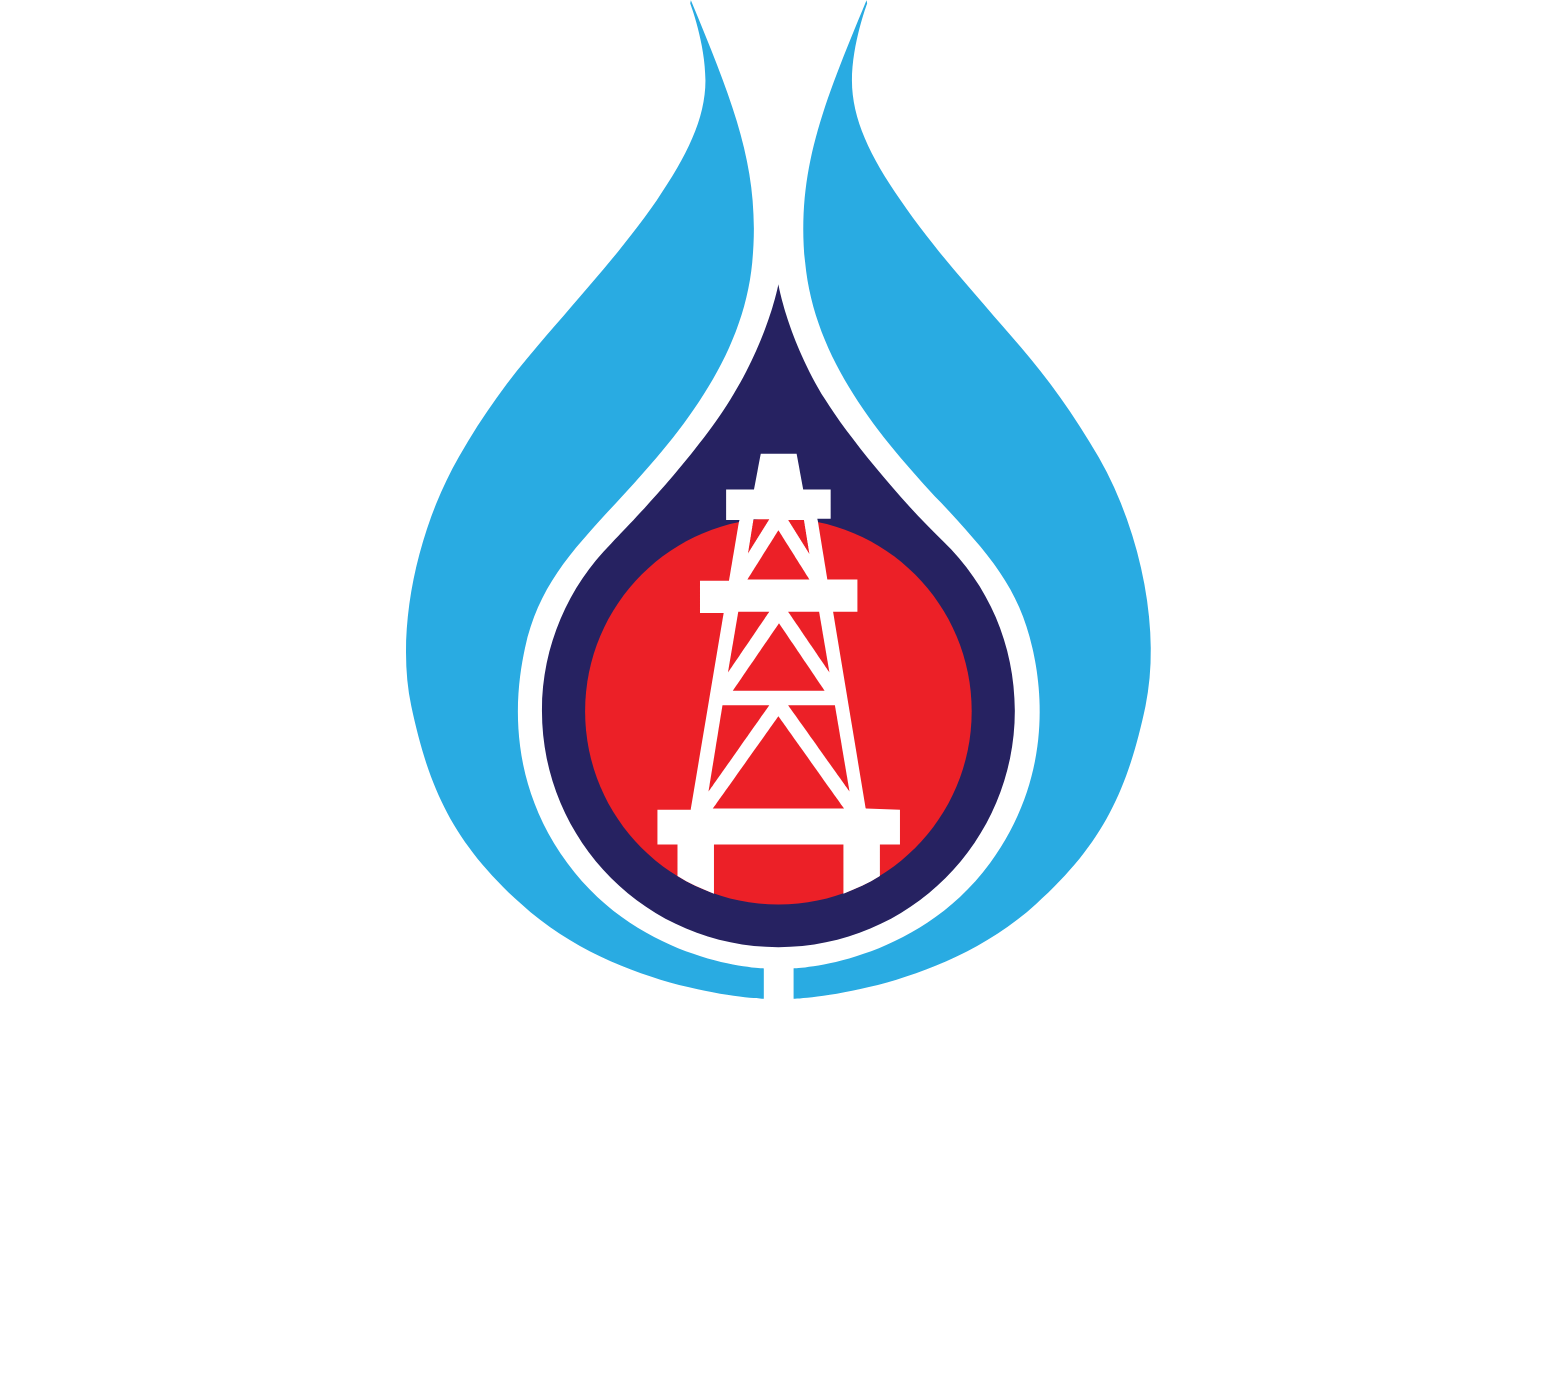 PTT Exploration and Production logo large for dark backgrounds (transparent PNG)